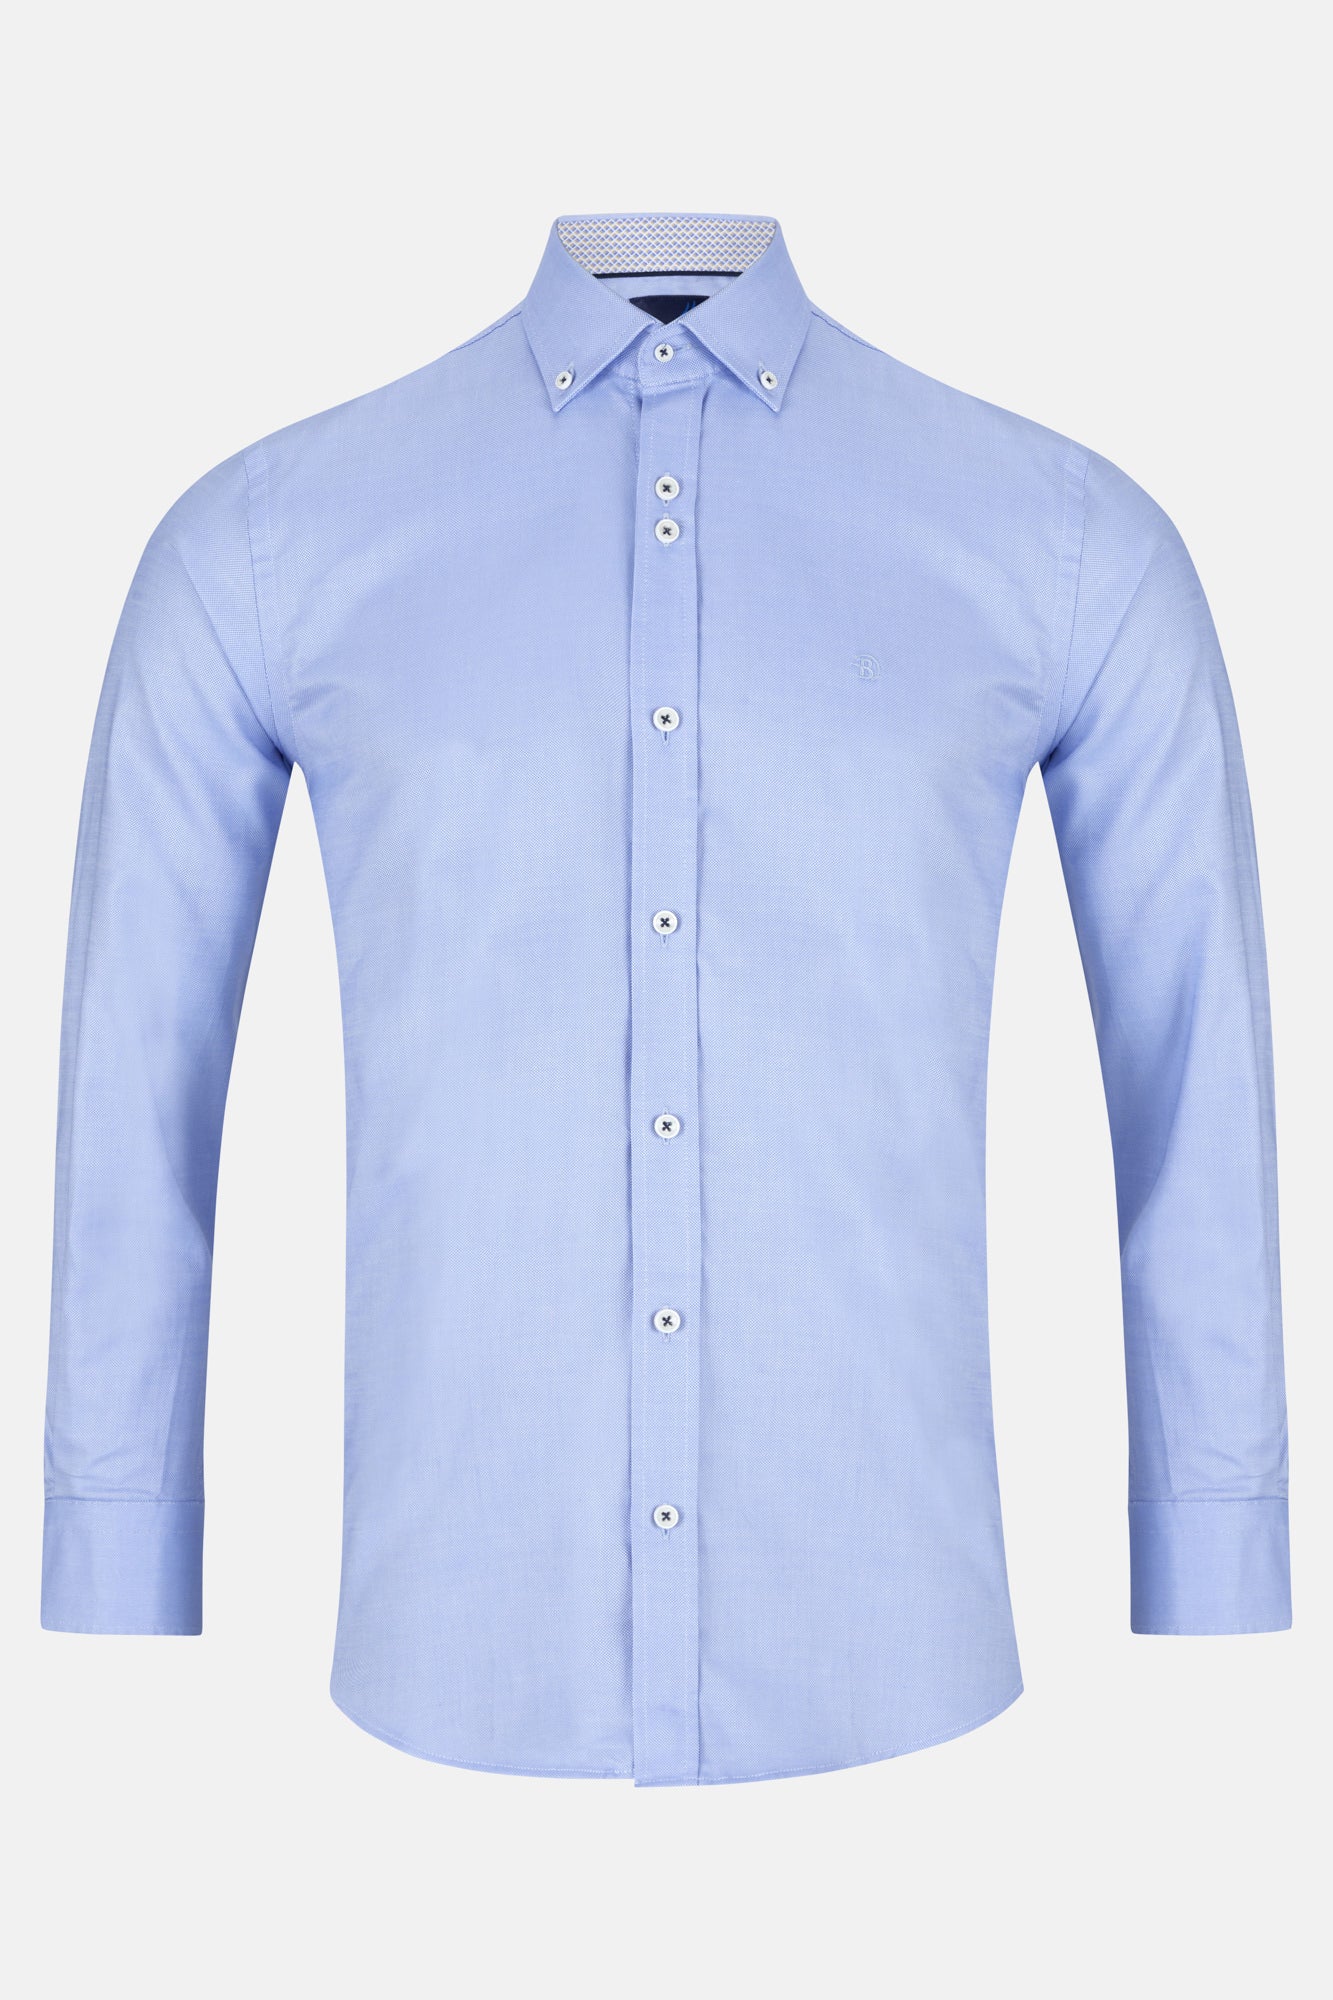 Noah Blue Long Sleeved Shirt By Benetti Menswear 